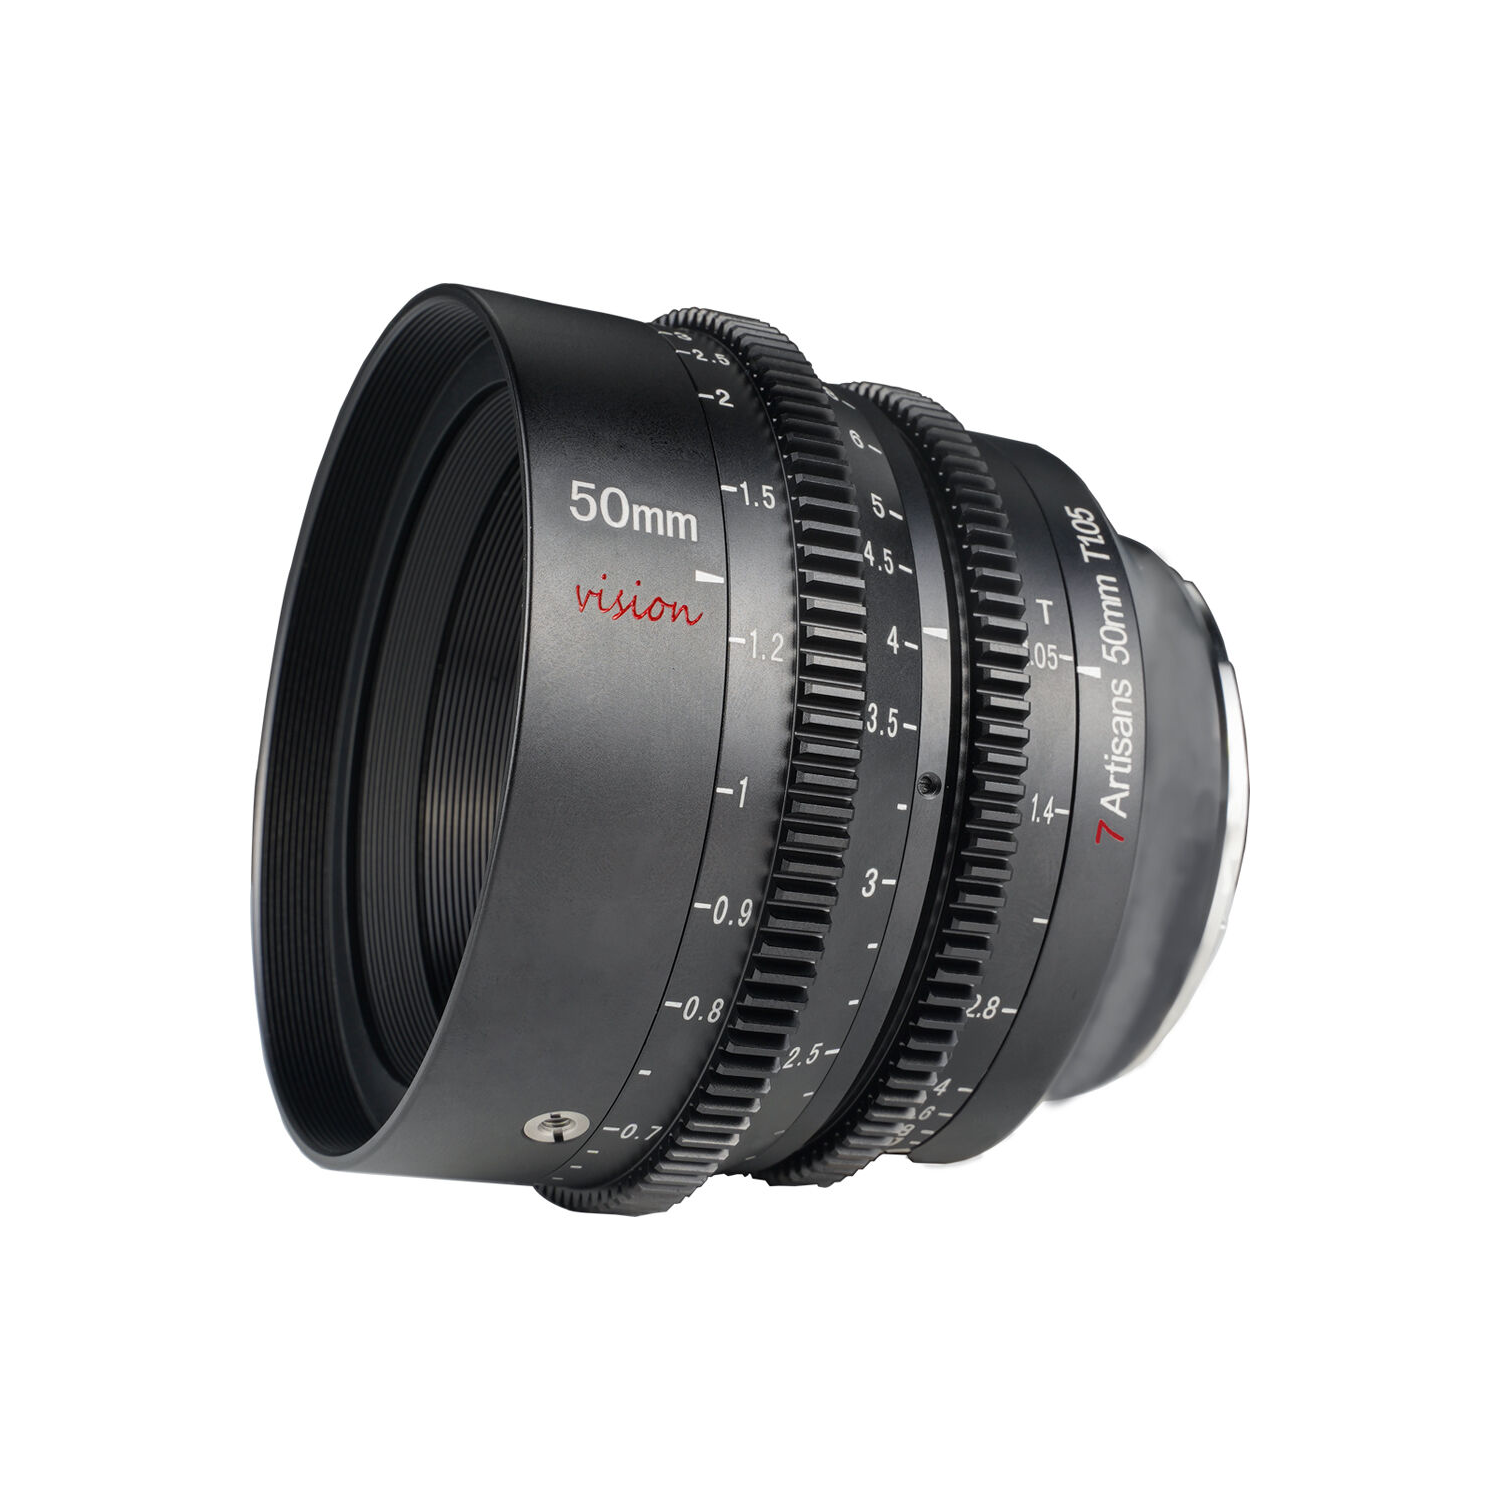 7artisans Photoelectric 50mm T1.05 Vision Cine Lens for Sony E Mount